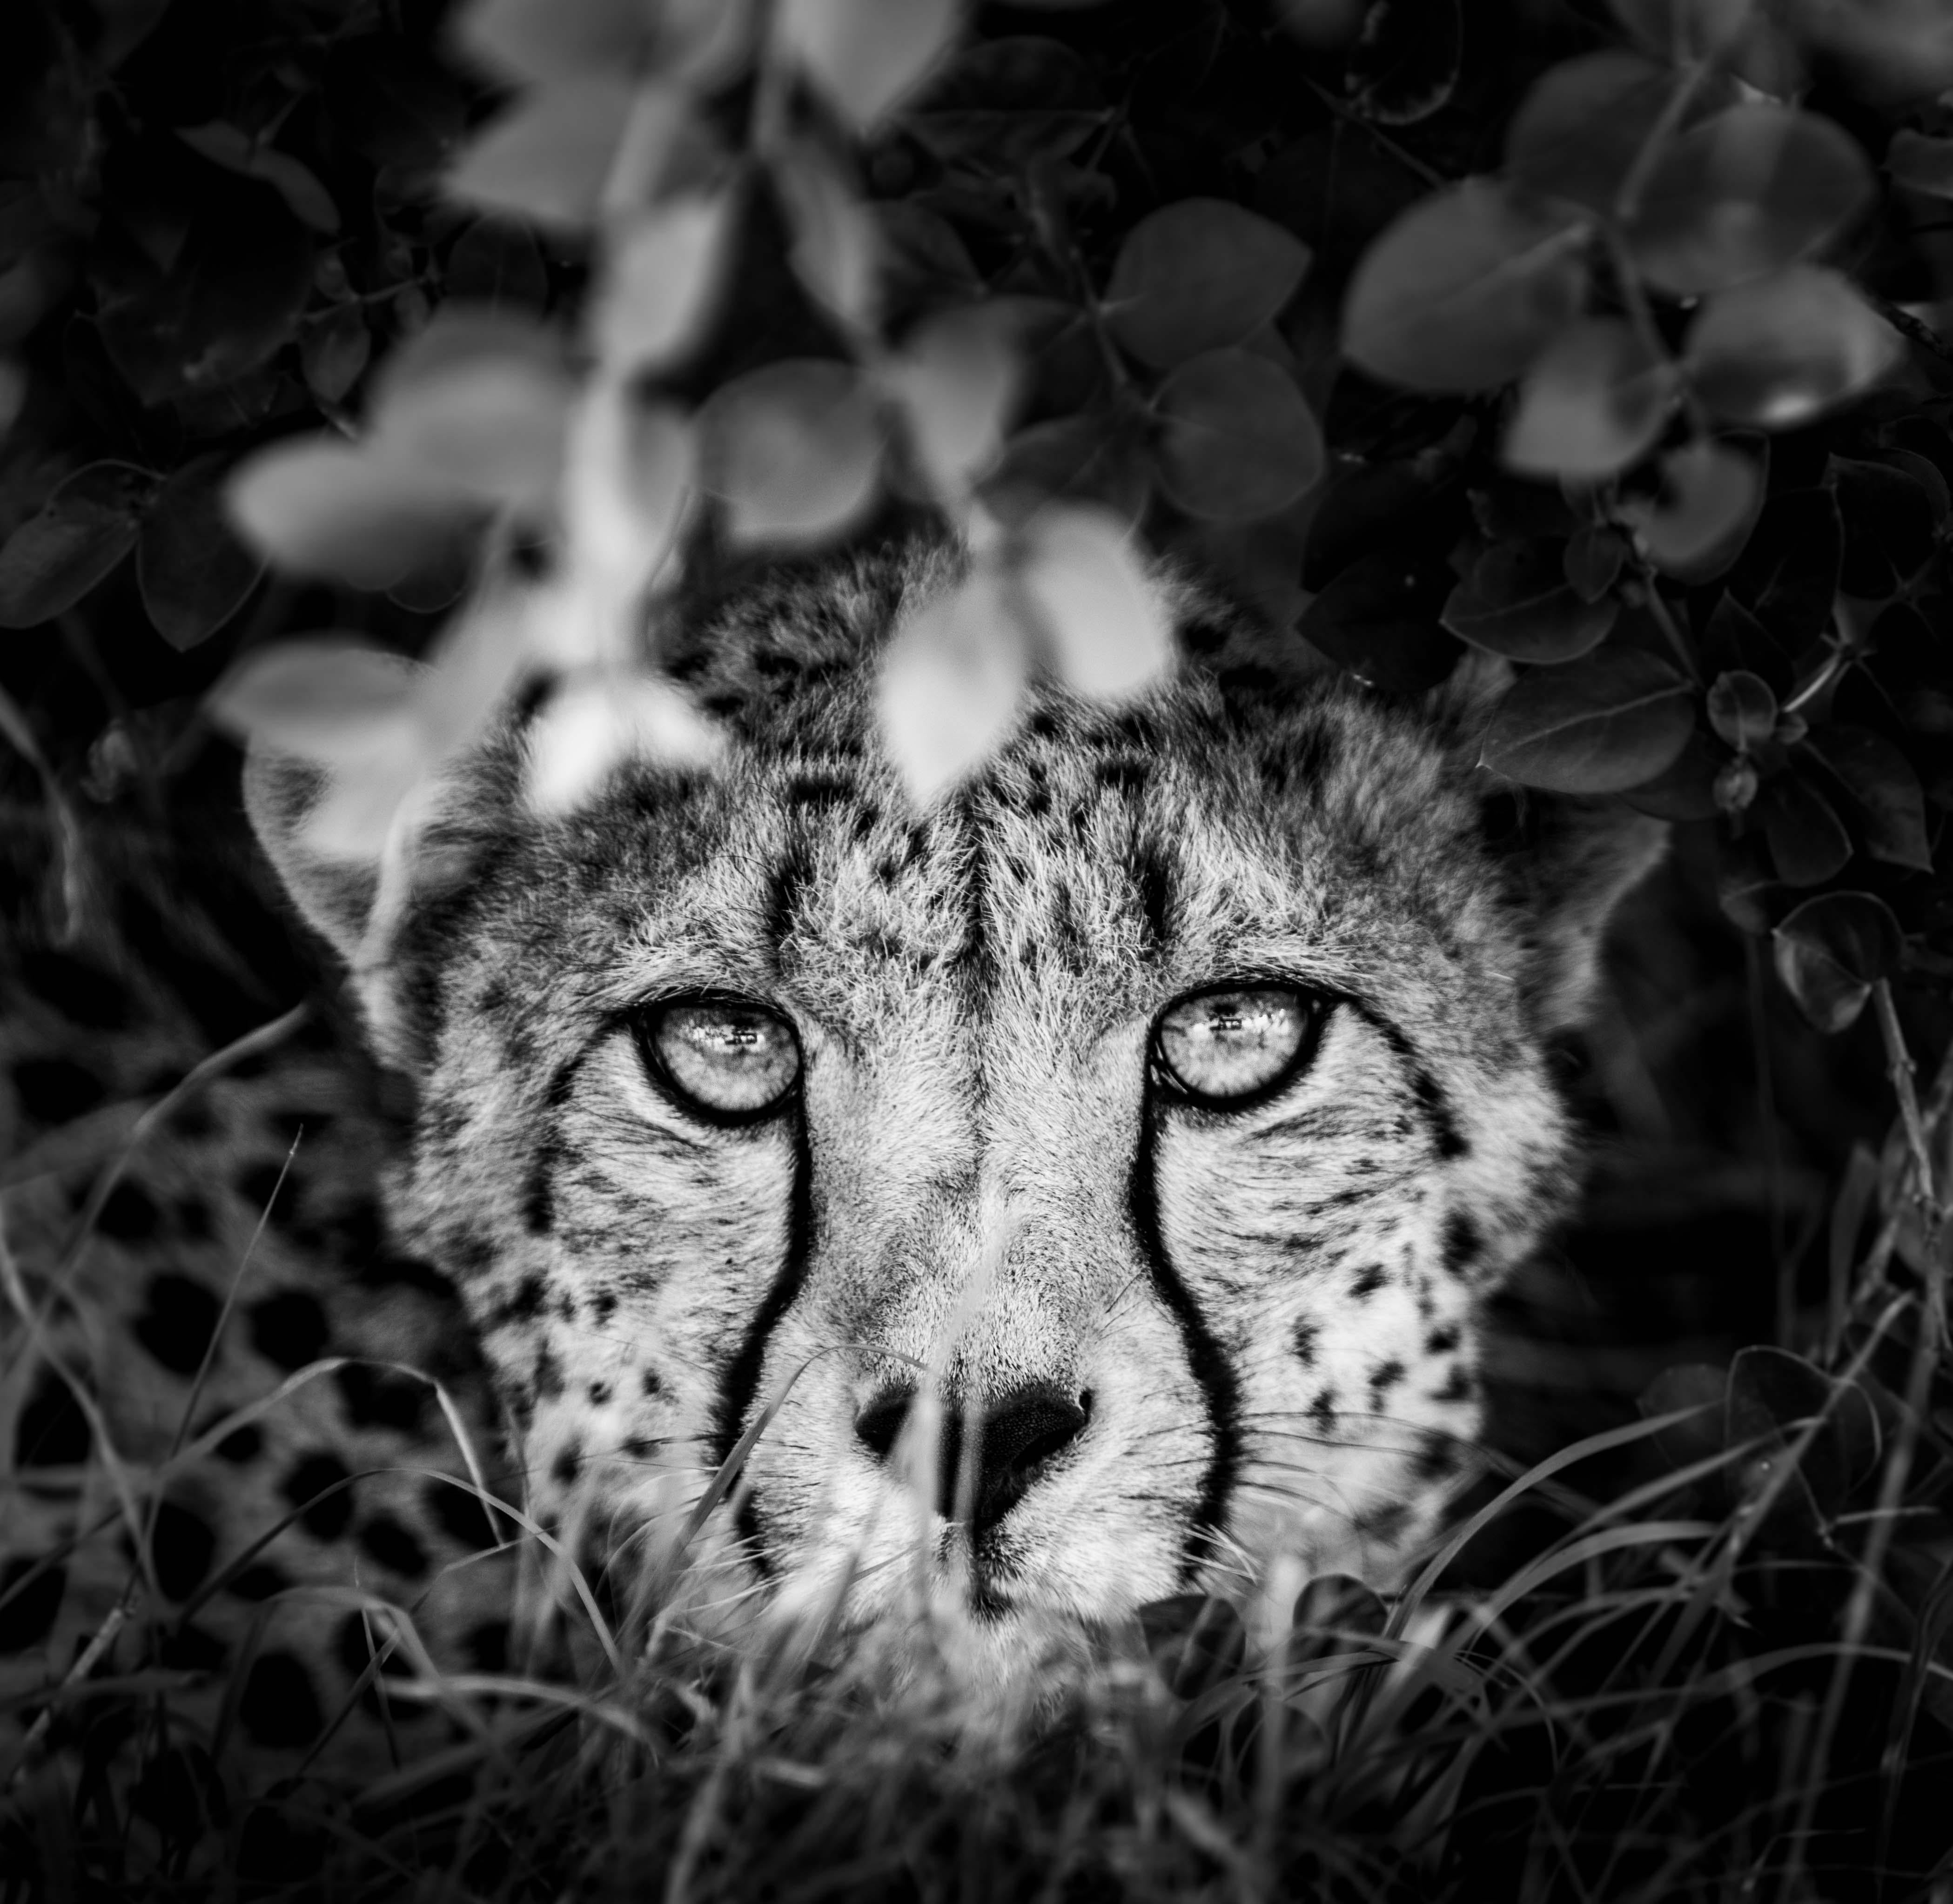 James Lewin - The Cheetah and I, Borana, Kenya, Fotografie 2020, Nachdruck